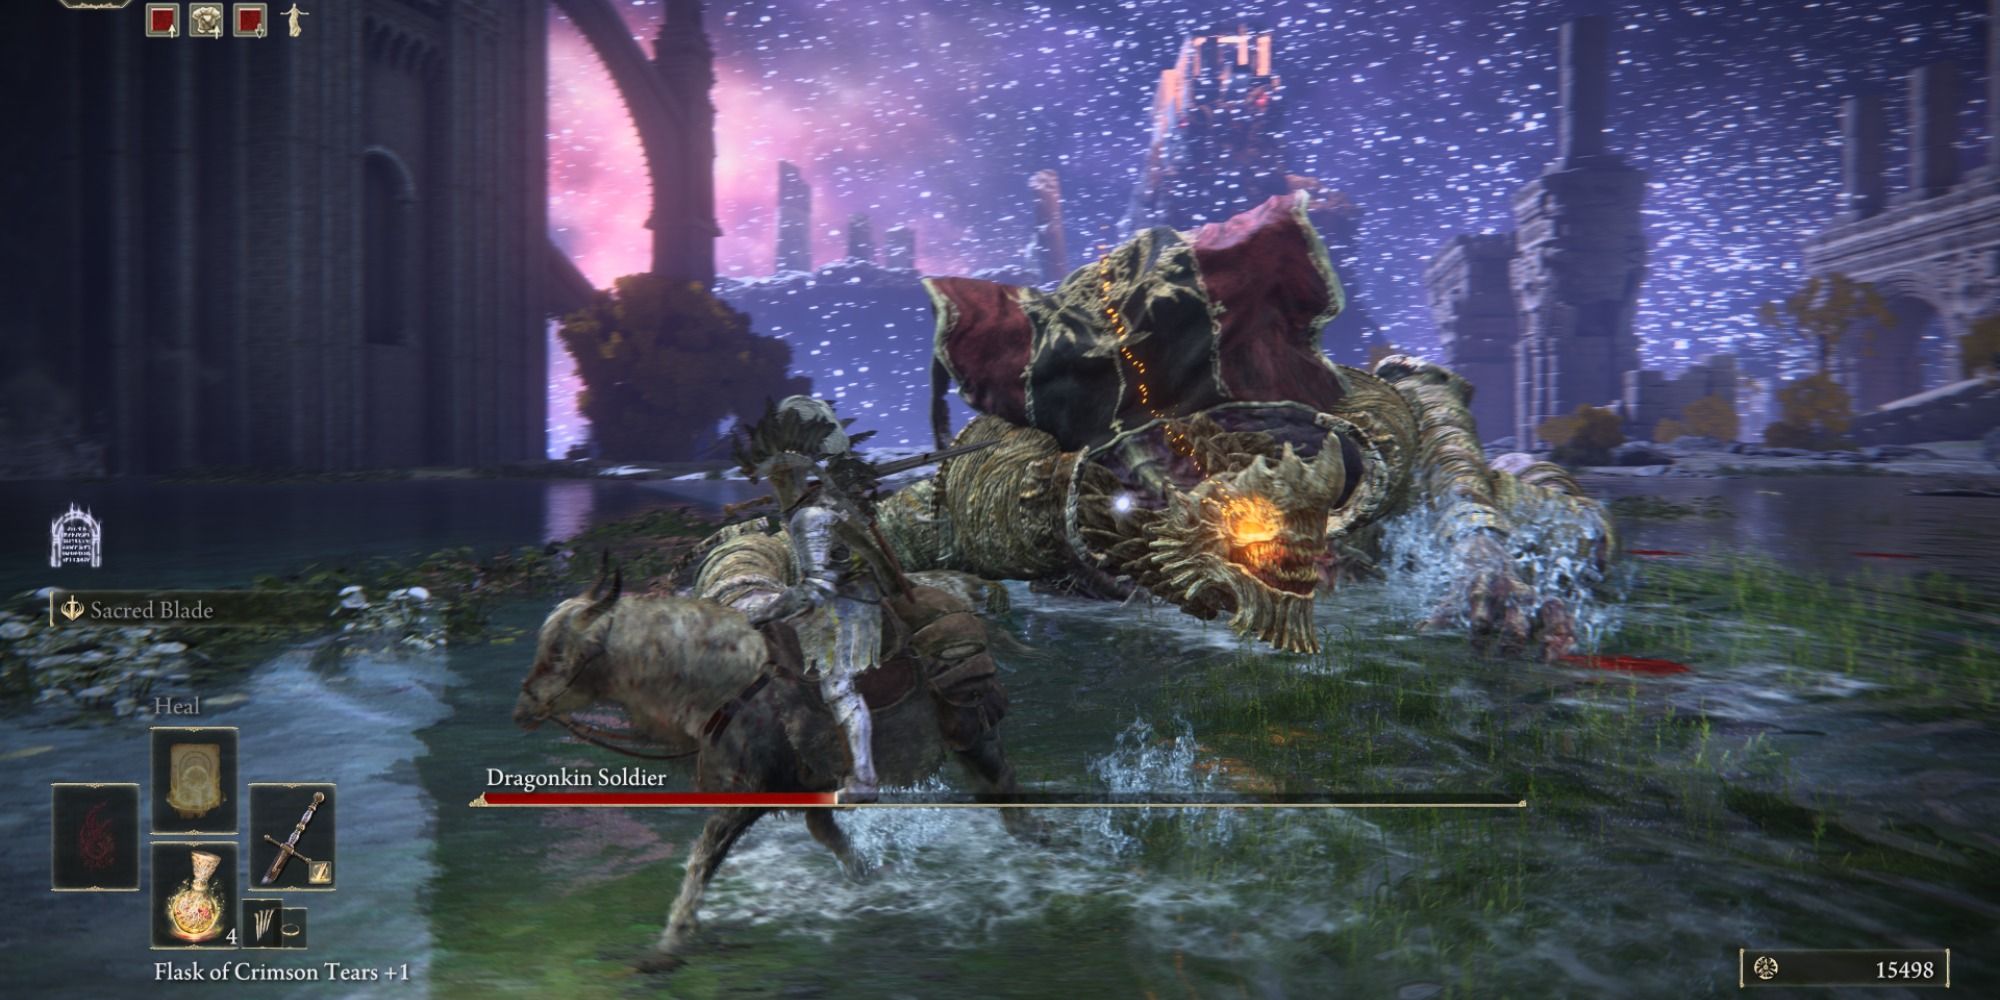 The player character battling the Dragonkin Soldier boss on Torrent in Elden Ring